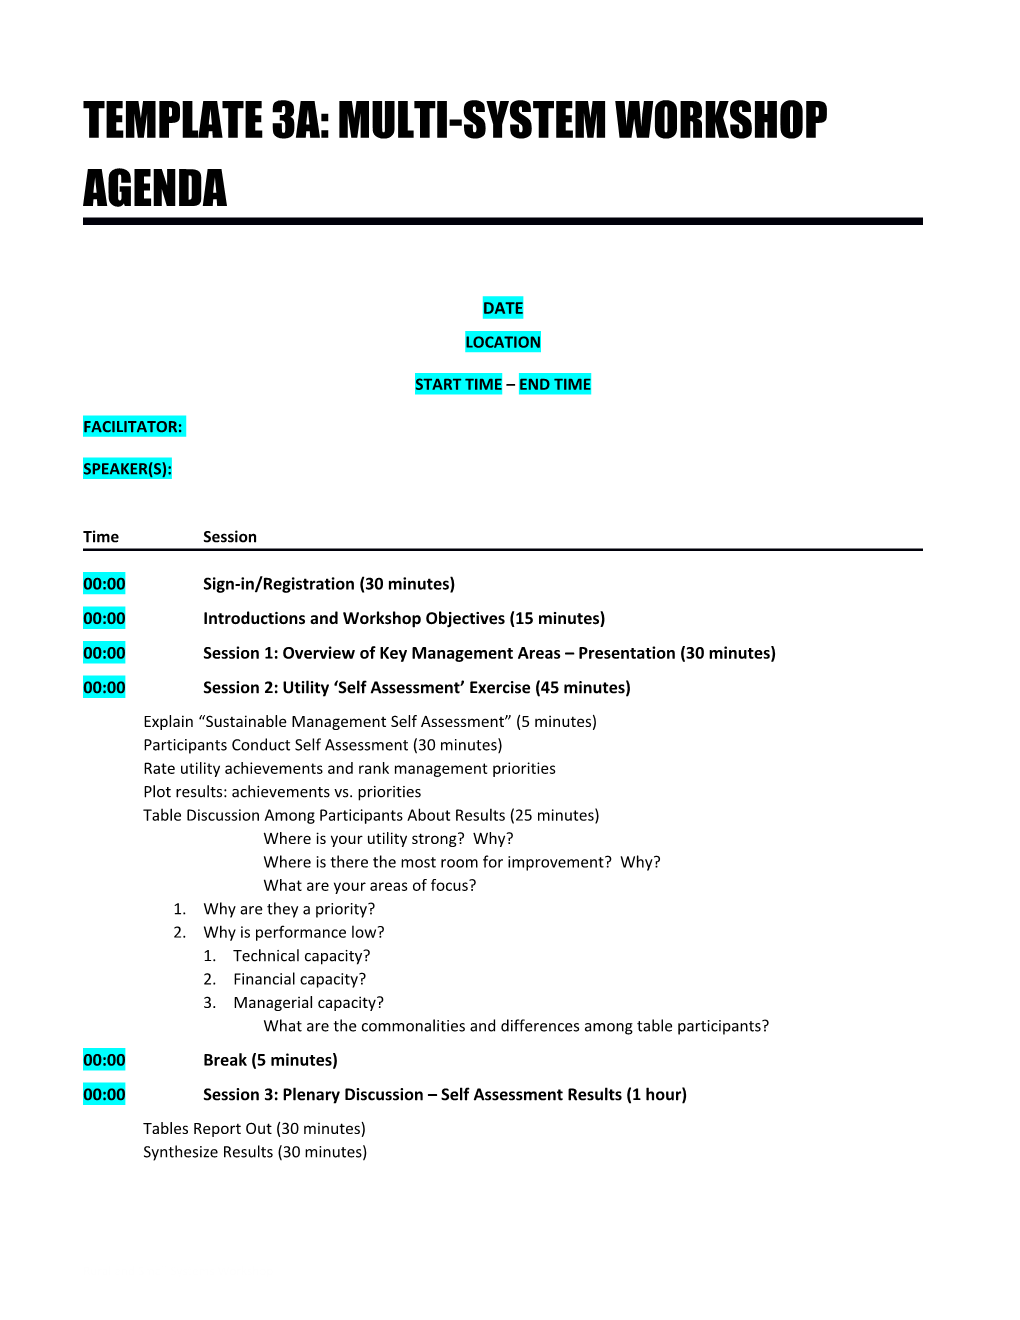 Template 3A: Multi-System Workshop Agenda